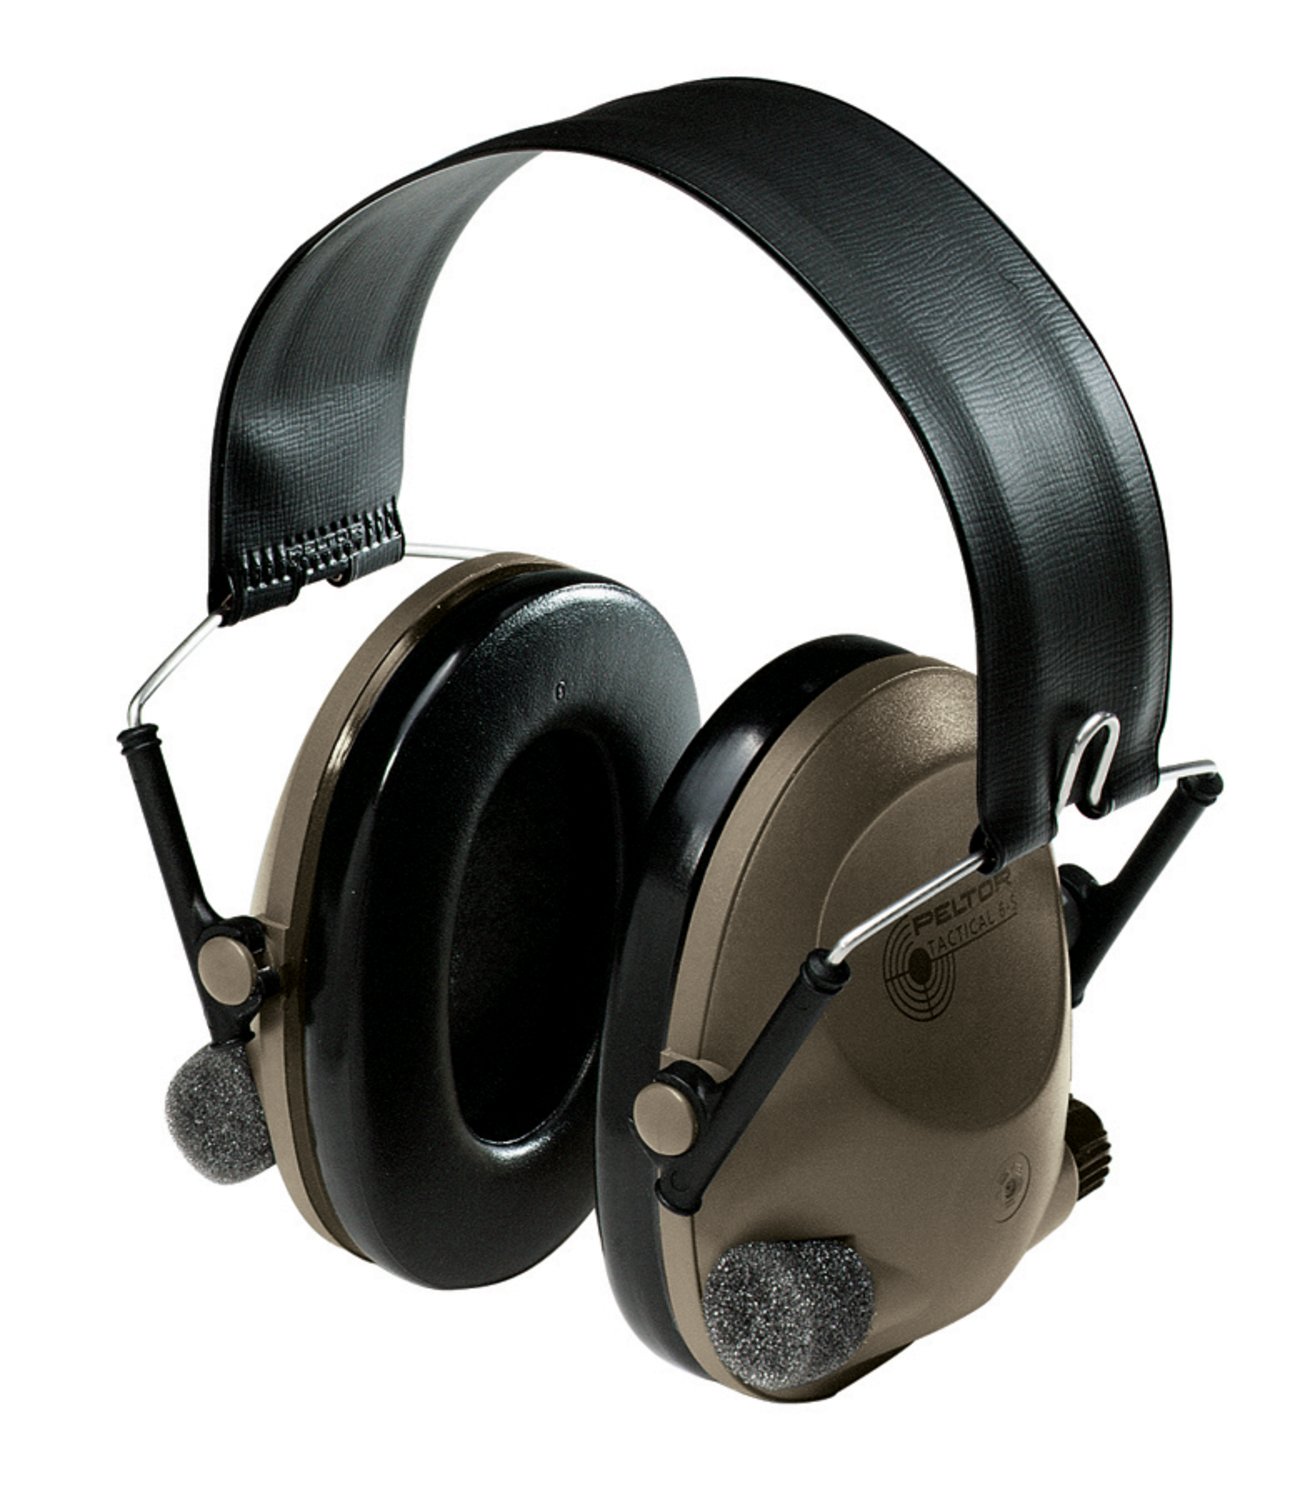 7100009538 - 3M PELTOR SoundTrap Slimline Earmuff MT15H67FB, Tactical Electronic
Headset Headband, 1 EA